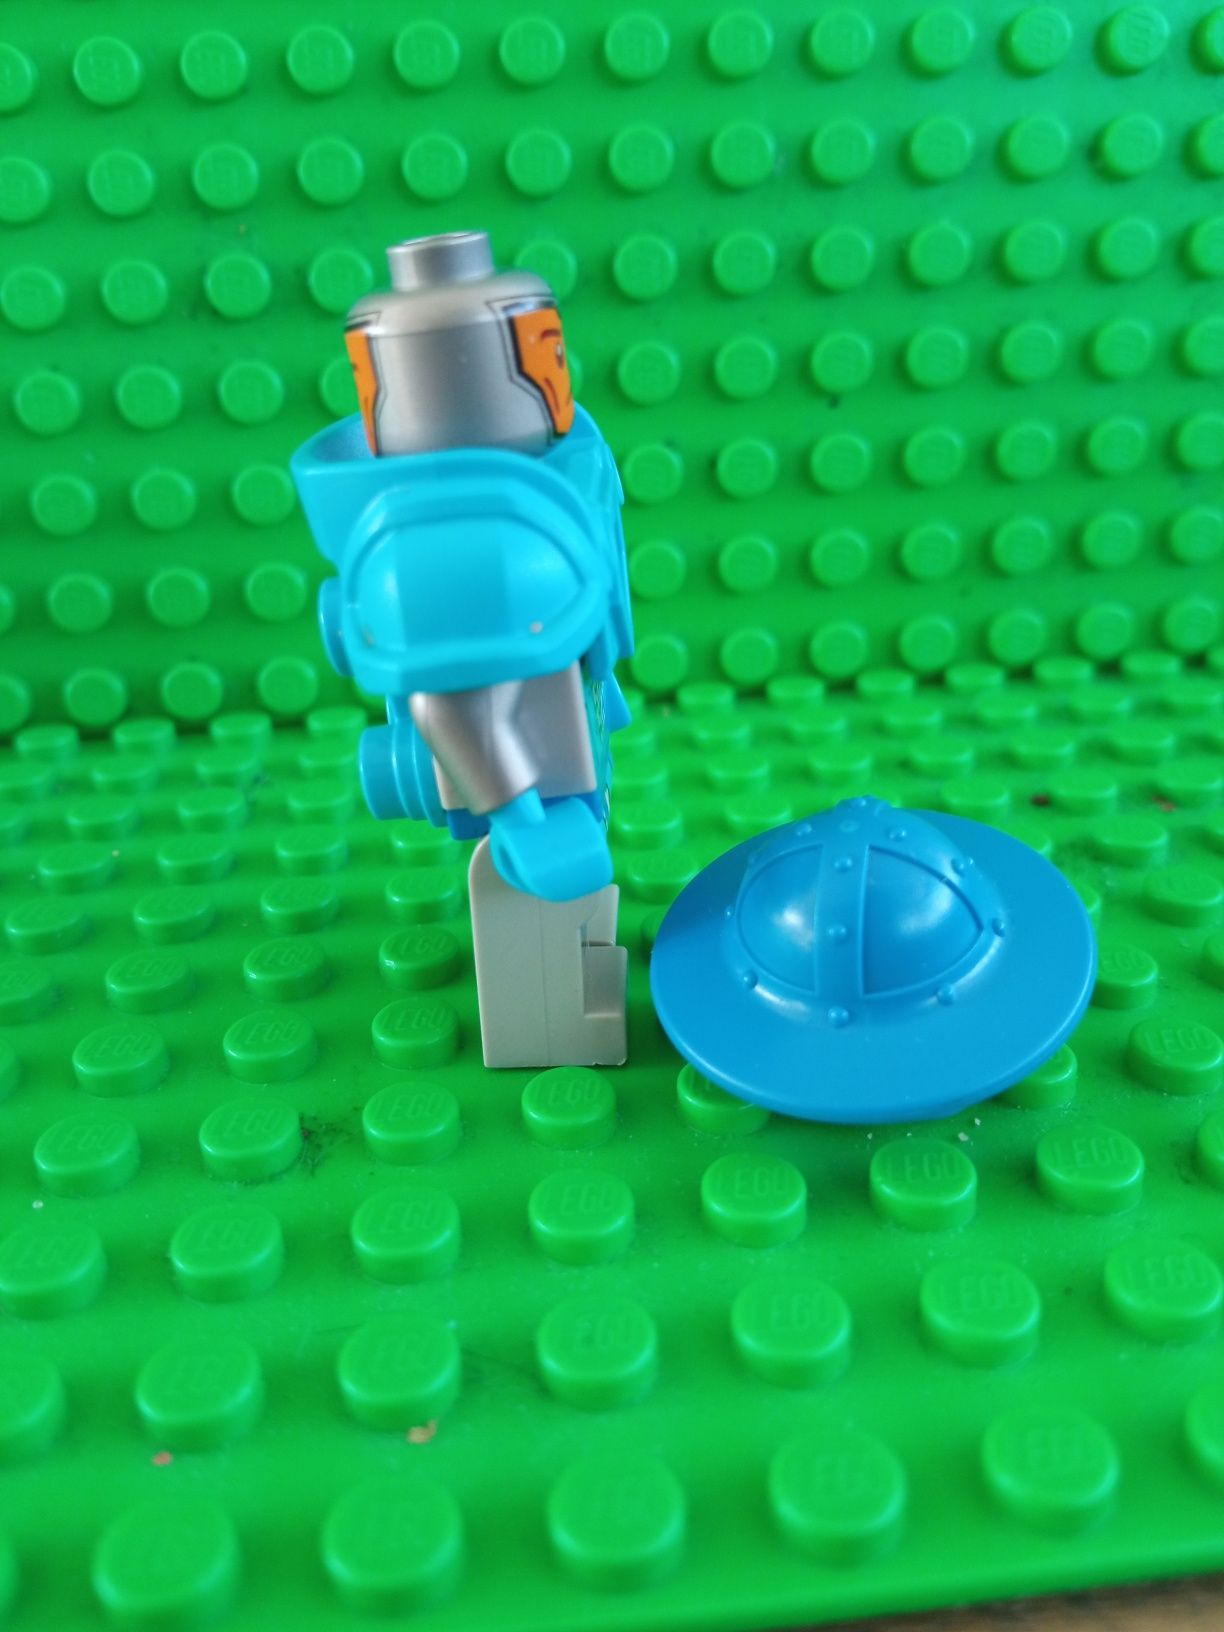 LEGO  Minifigures Nexo Knights Royal Soldier  nex019